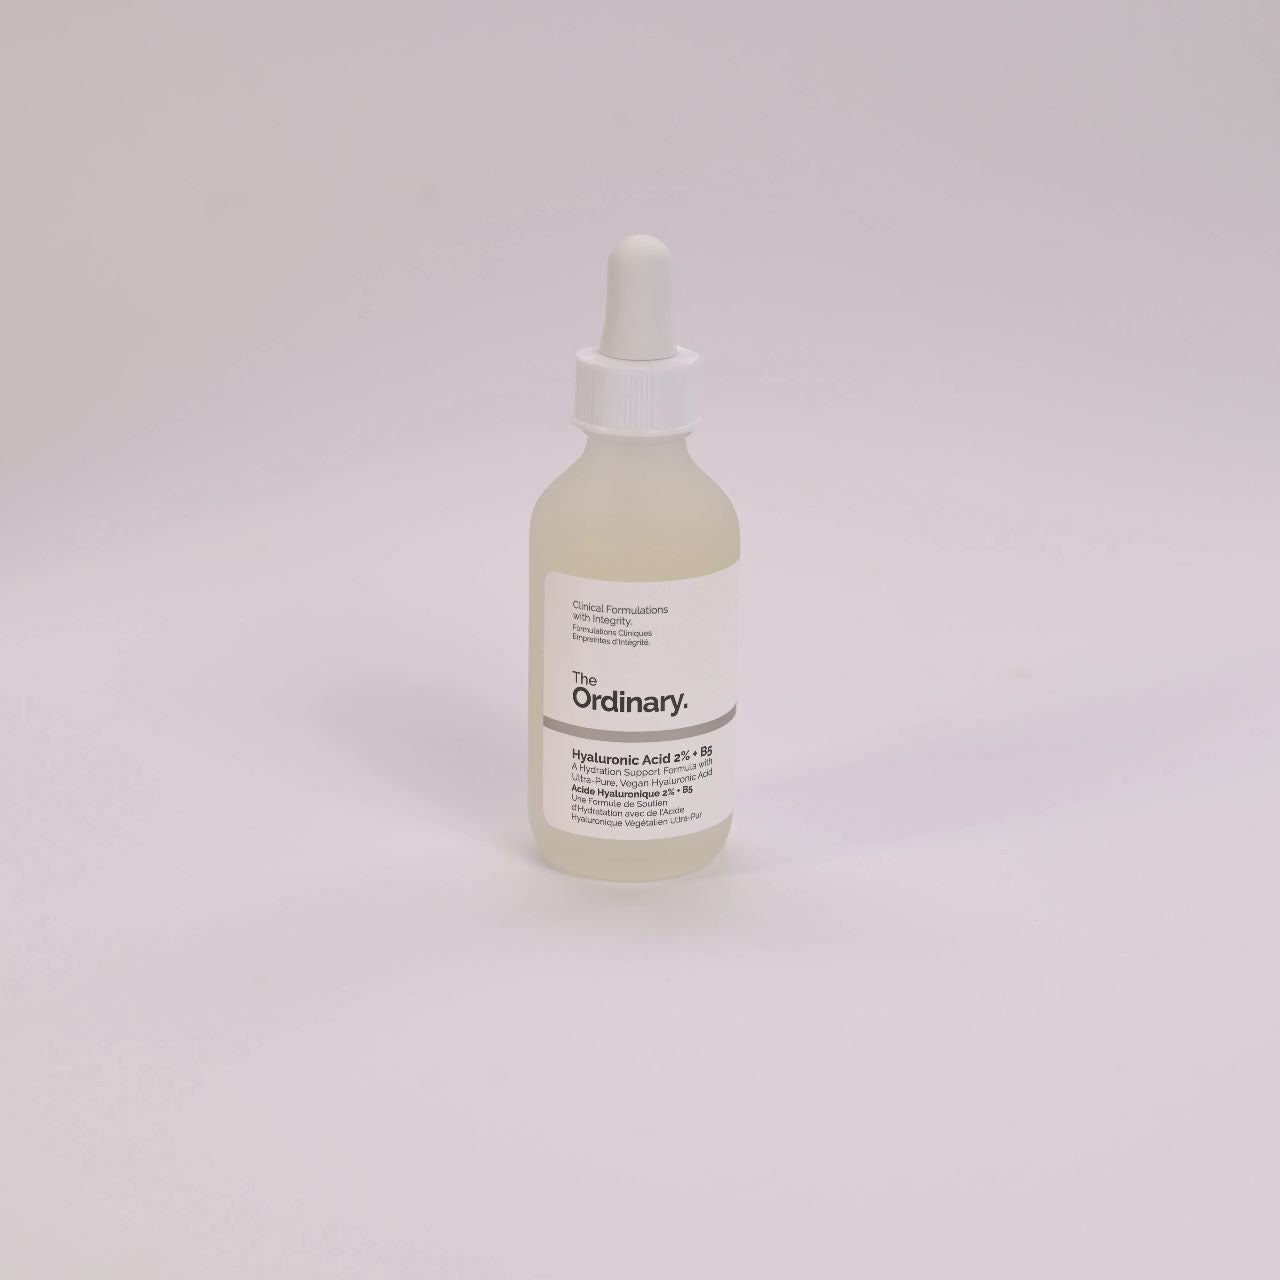 The Ordinary Hyaluronic Acid 2% + B5 Serum 60ml